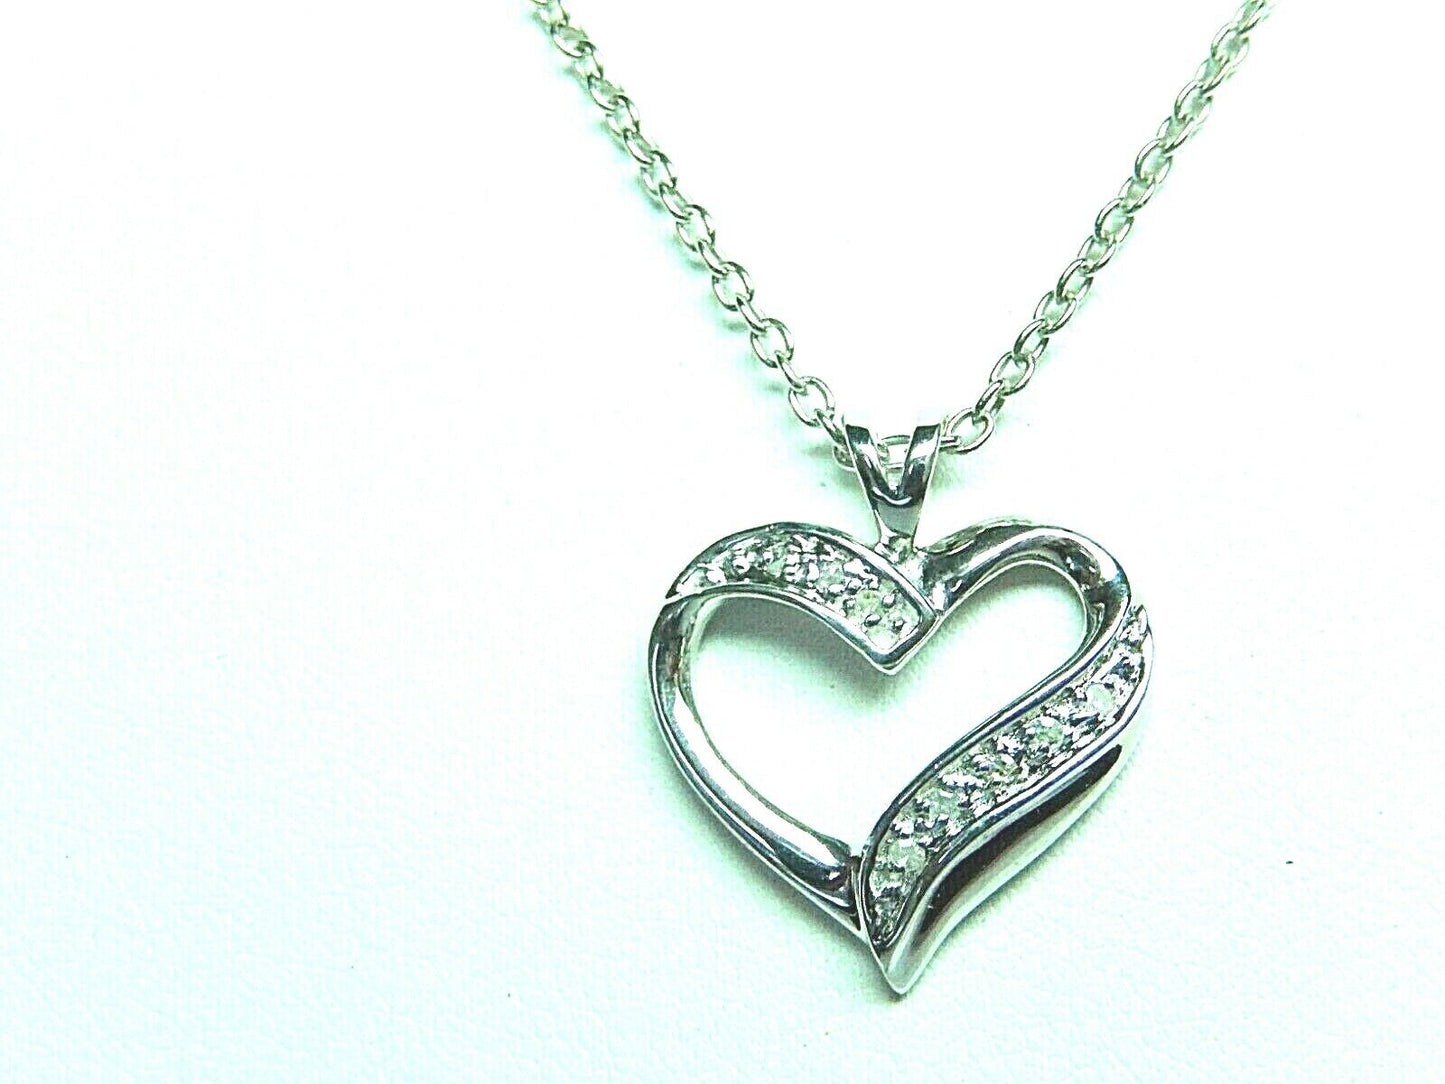 *NWT* 10K White Gold Diamond Heart Pendant  With 18" Chain